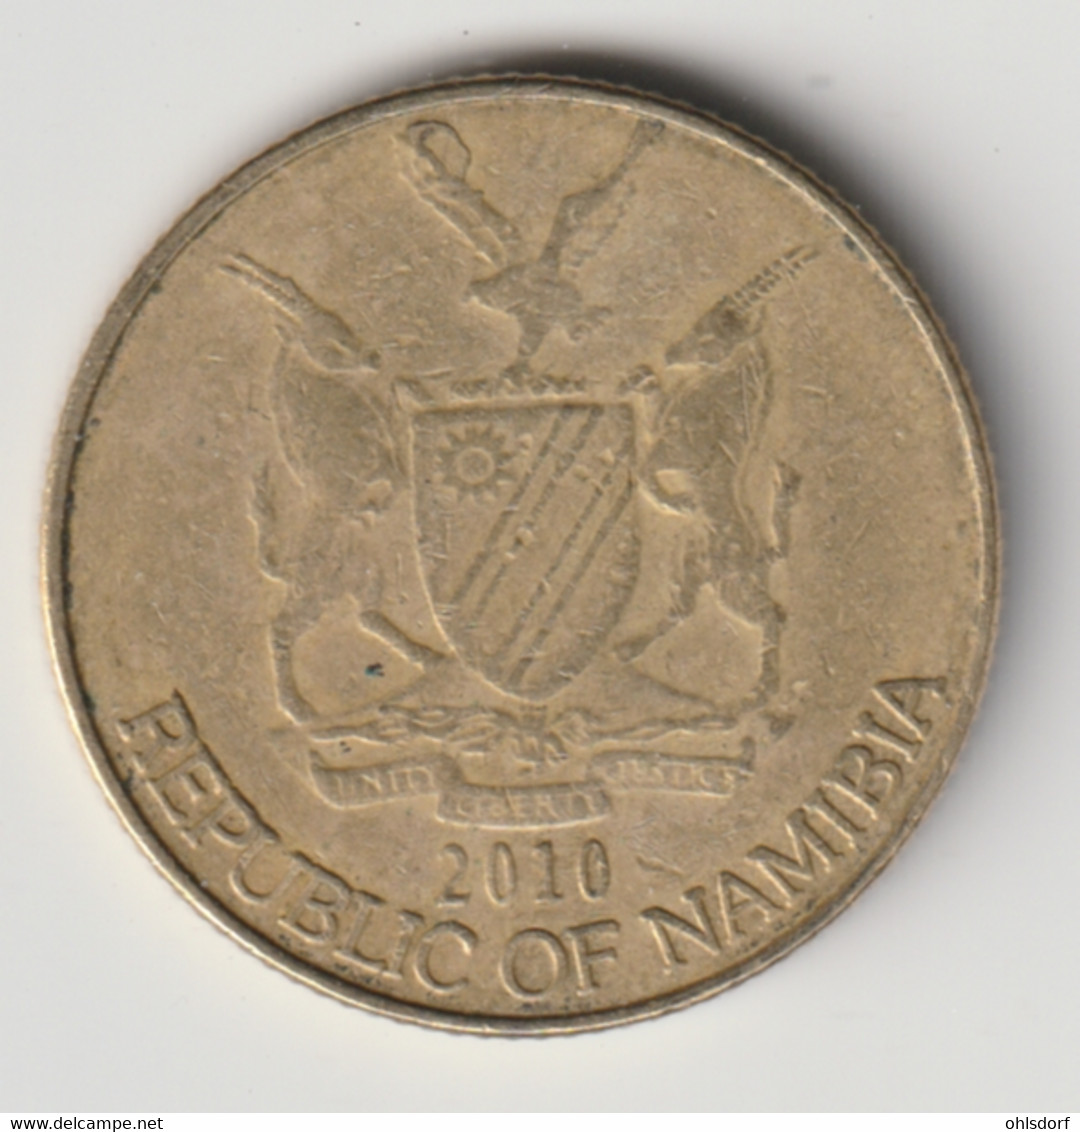 NAMIBIA 2010: 1 Dollar, KM 4 - Namibia